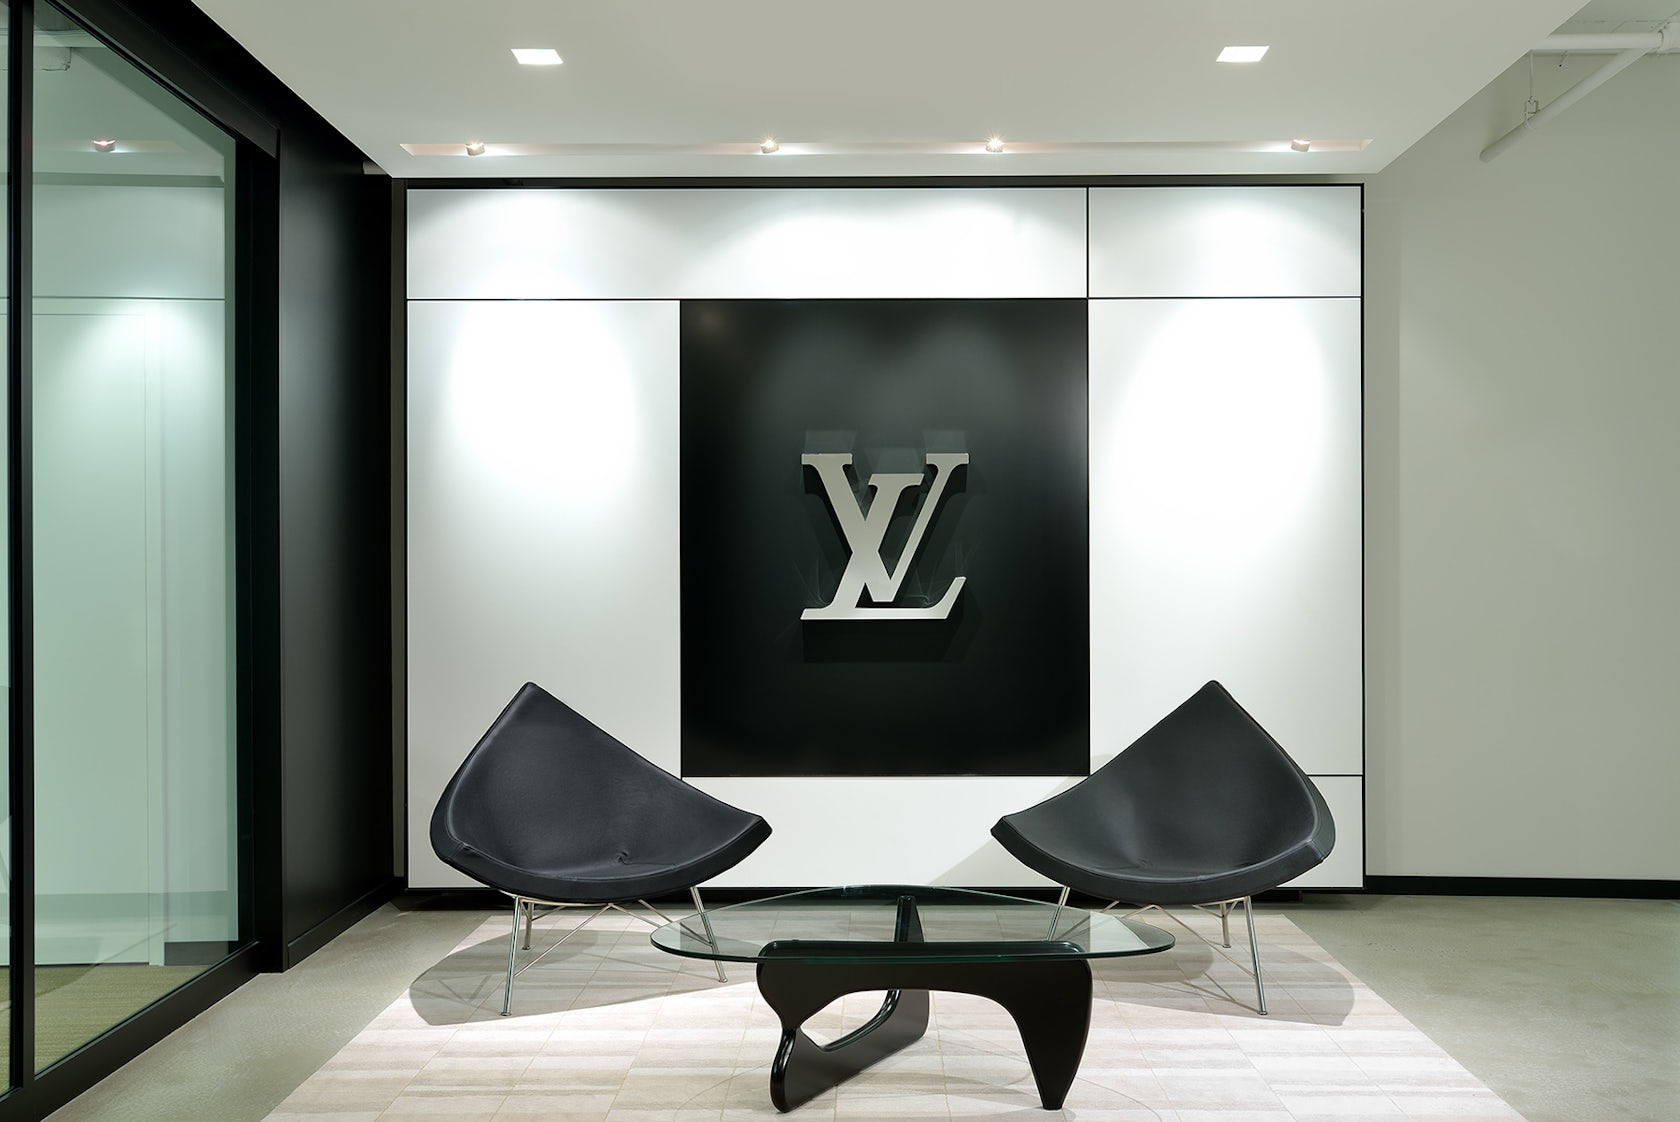 Louis Vuitton Corporate Office Toronto